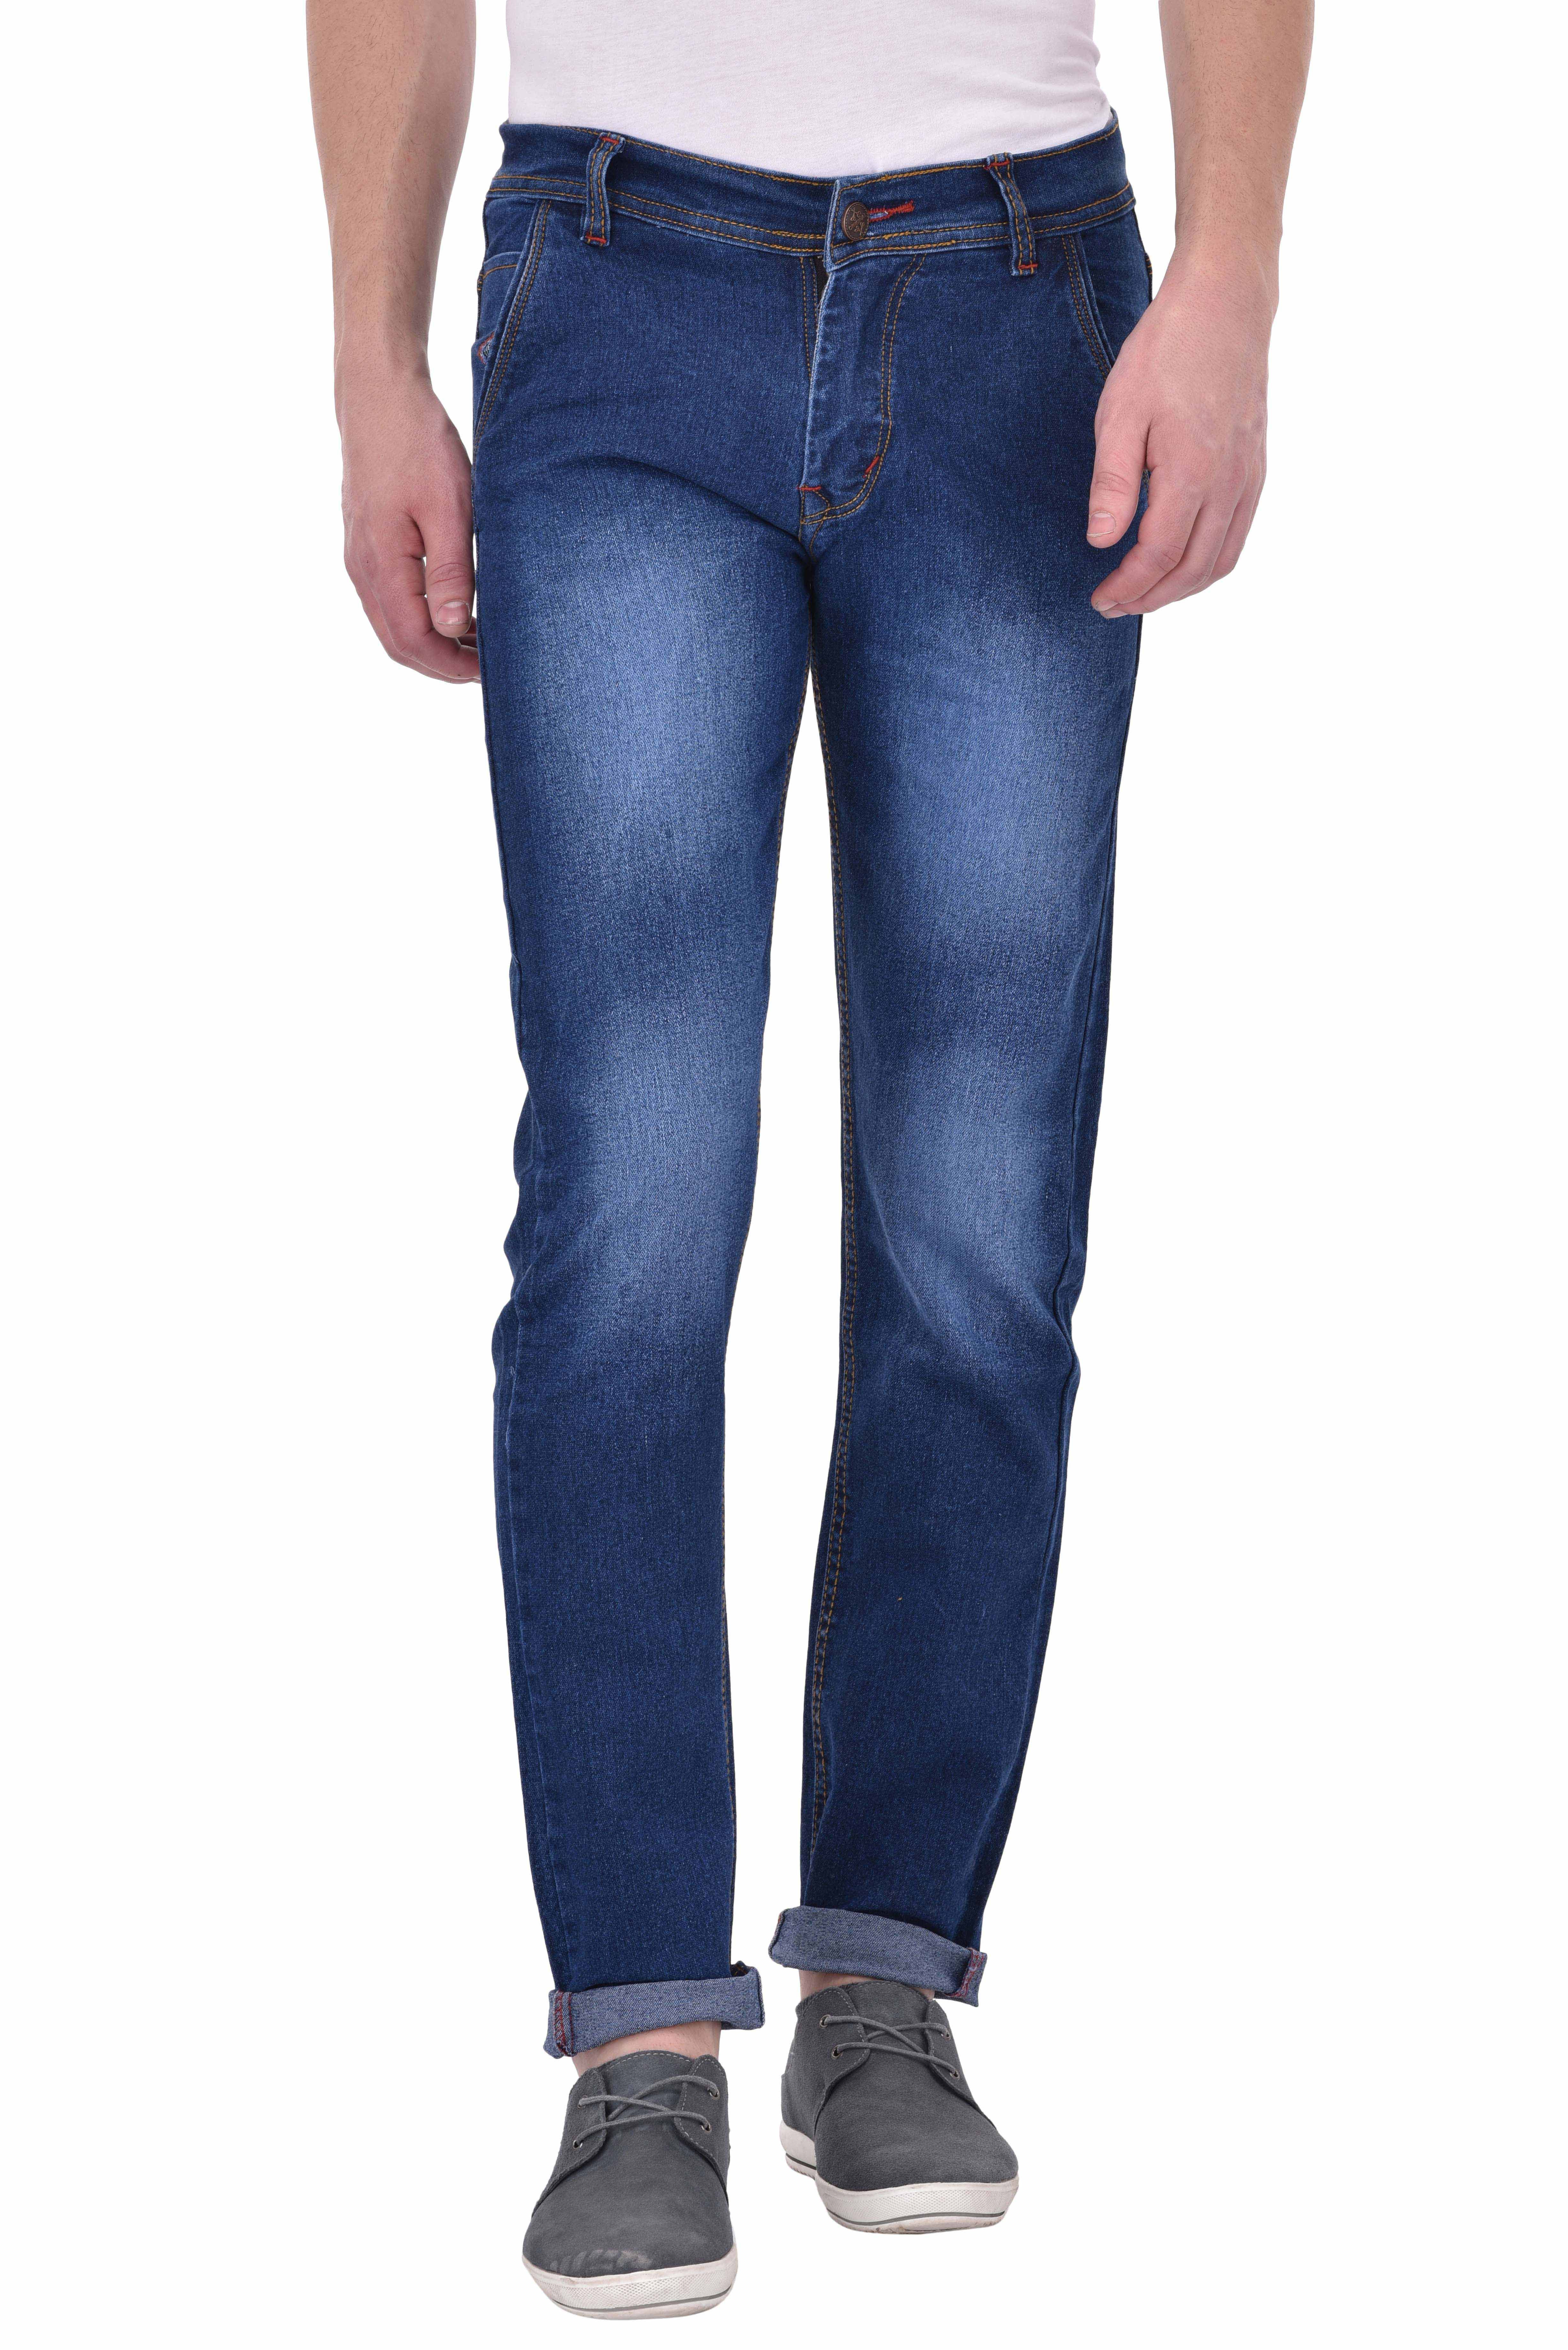 K-San Dark Blue Slim Jeans - Buy K-San Dark Blue Slim Jeans Online at ...